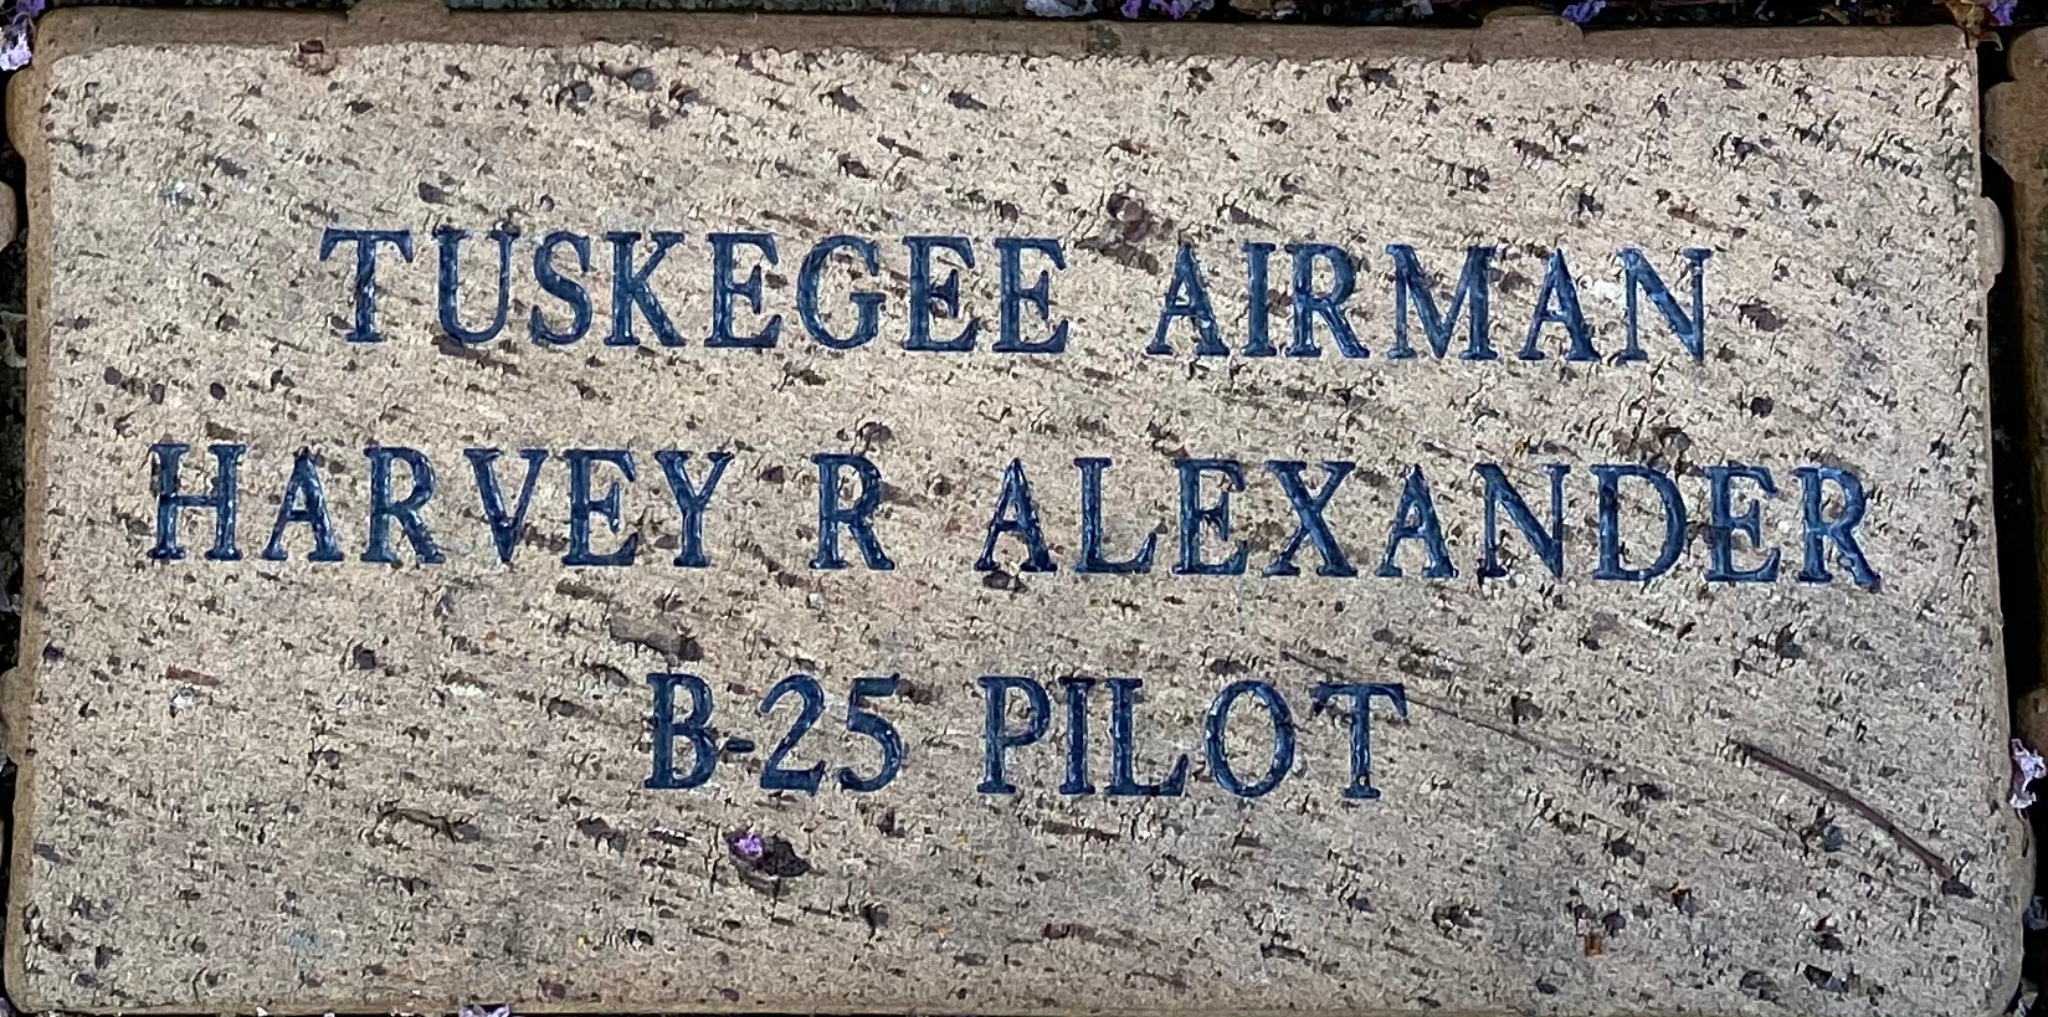 TUSKEGEE AIRMAN HARVEY R ALEXANDER B-25 PILOT